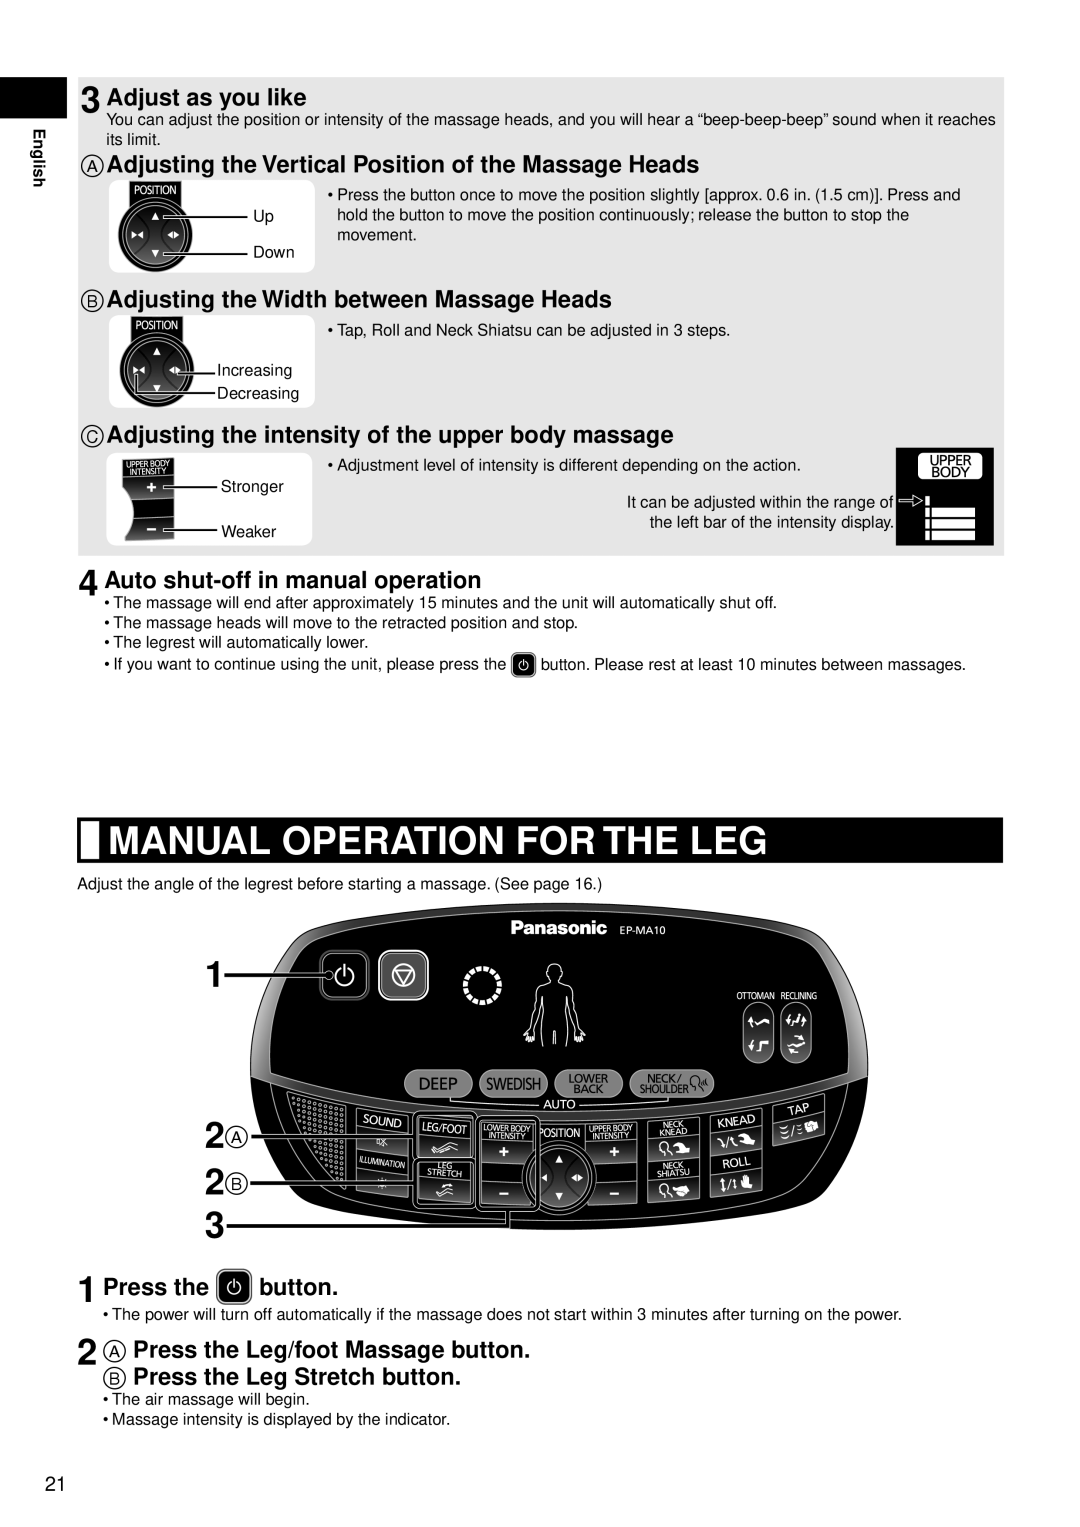 Panasonic EP-MA10 manual Manual Operation For The Leg, 2 2, Press the 